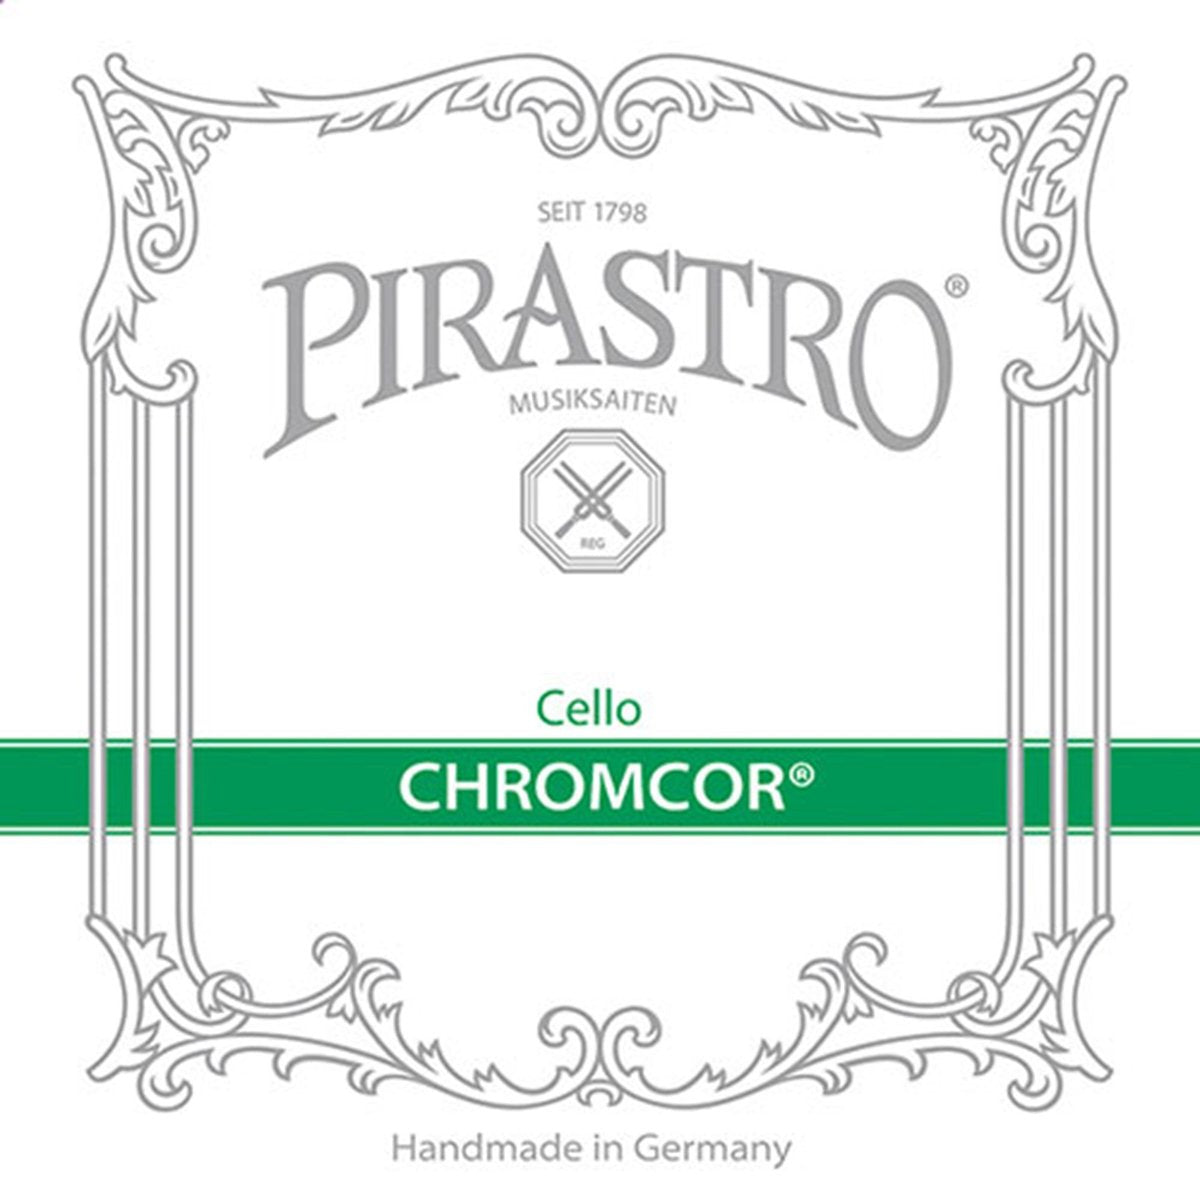 Pirastro Chromcor Cello G String